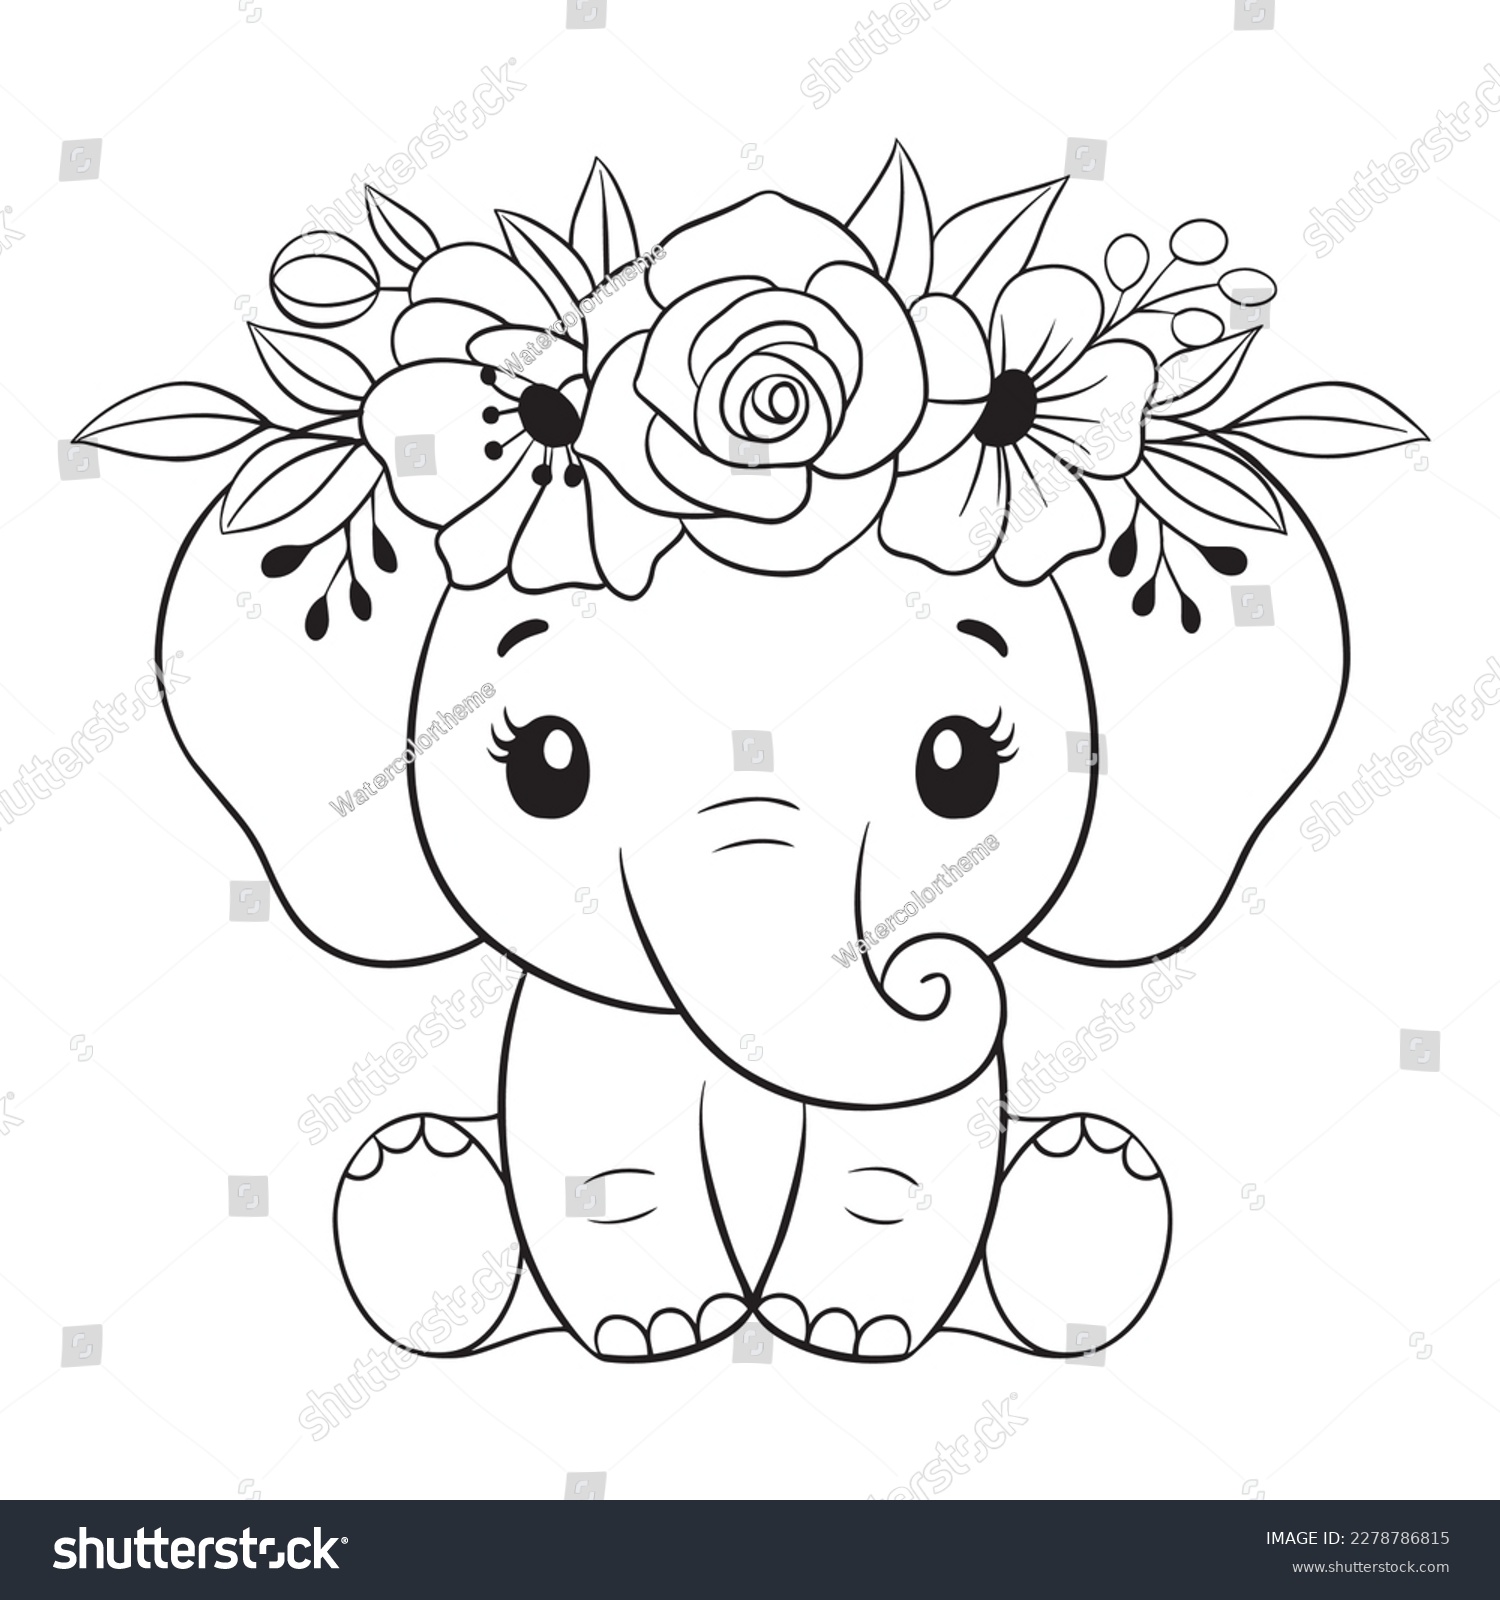 SVG of Baby Elephant svg,Elephant with Flower svg,Cute Elephant svg,Elephant Lineart,Elephant Vector,Elephant Clipart,Elephant Cut File,Cute Elephant,Black Elephant svg